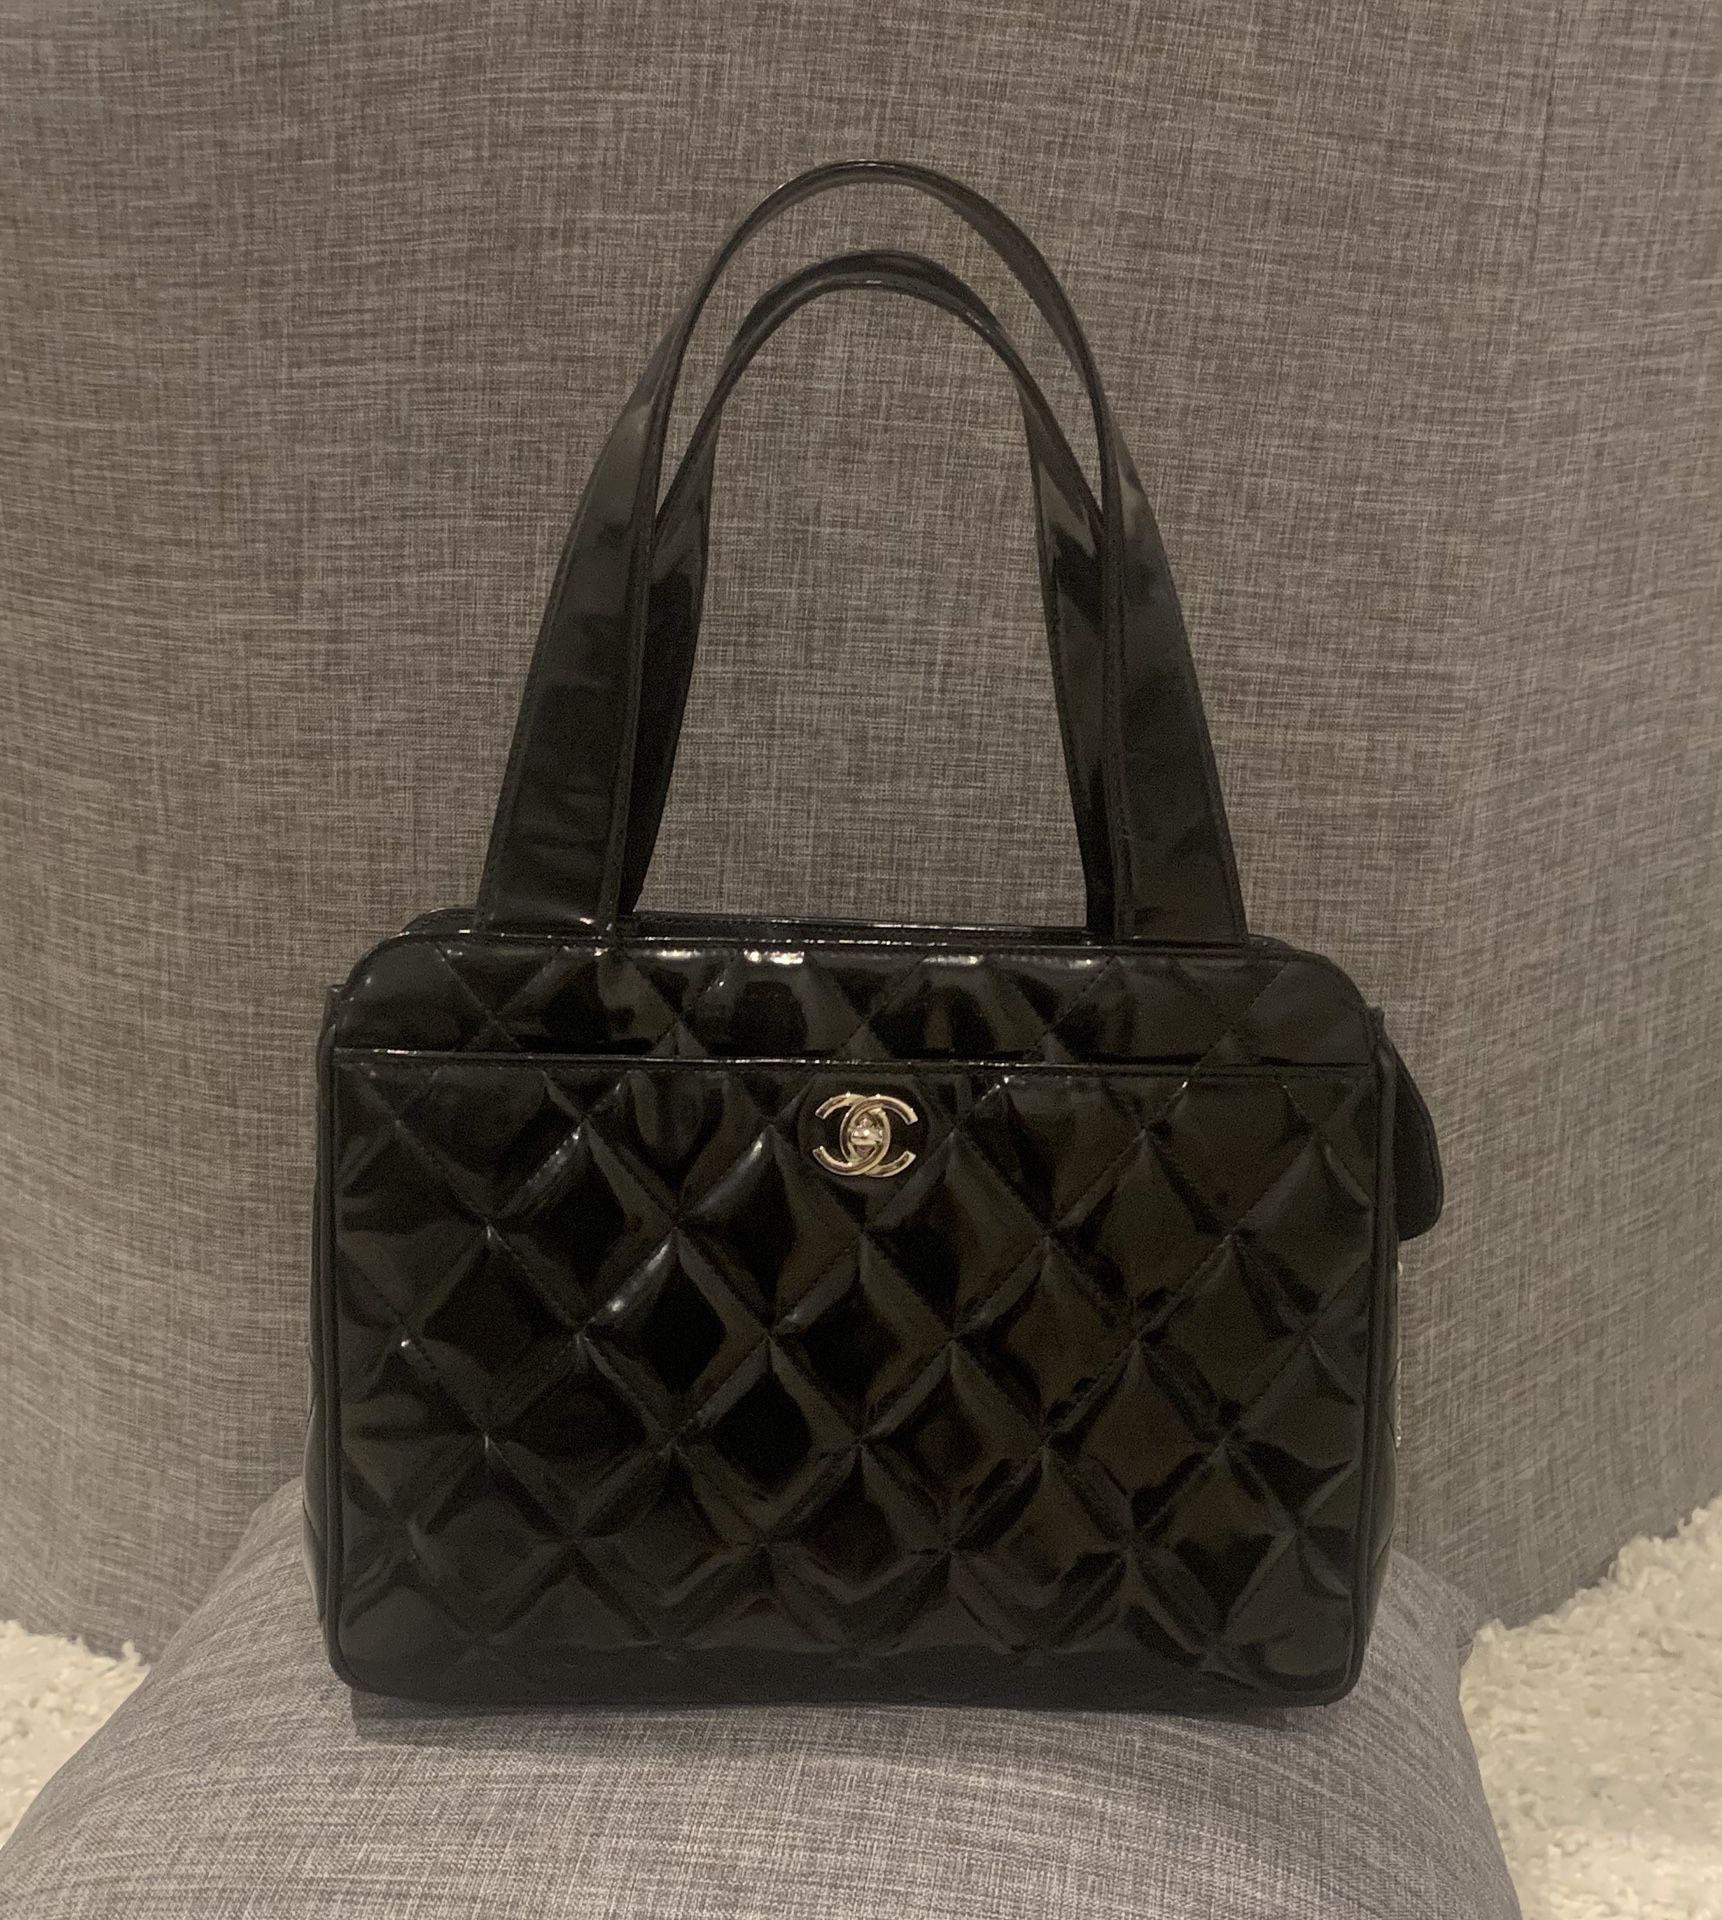 Authentic Chanel Vintage Tote Bag